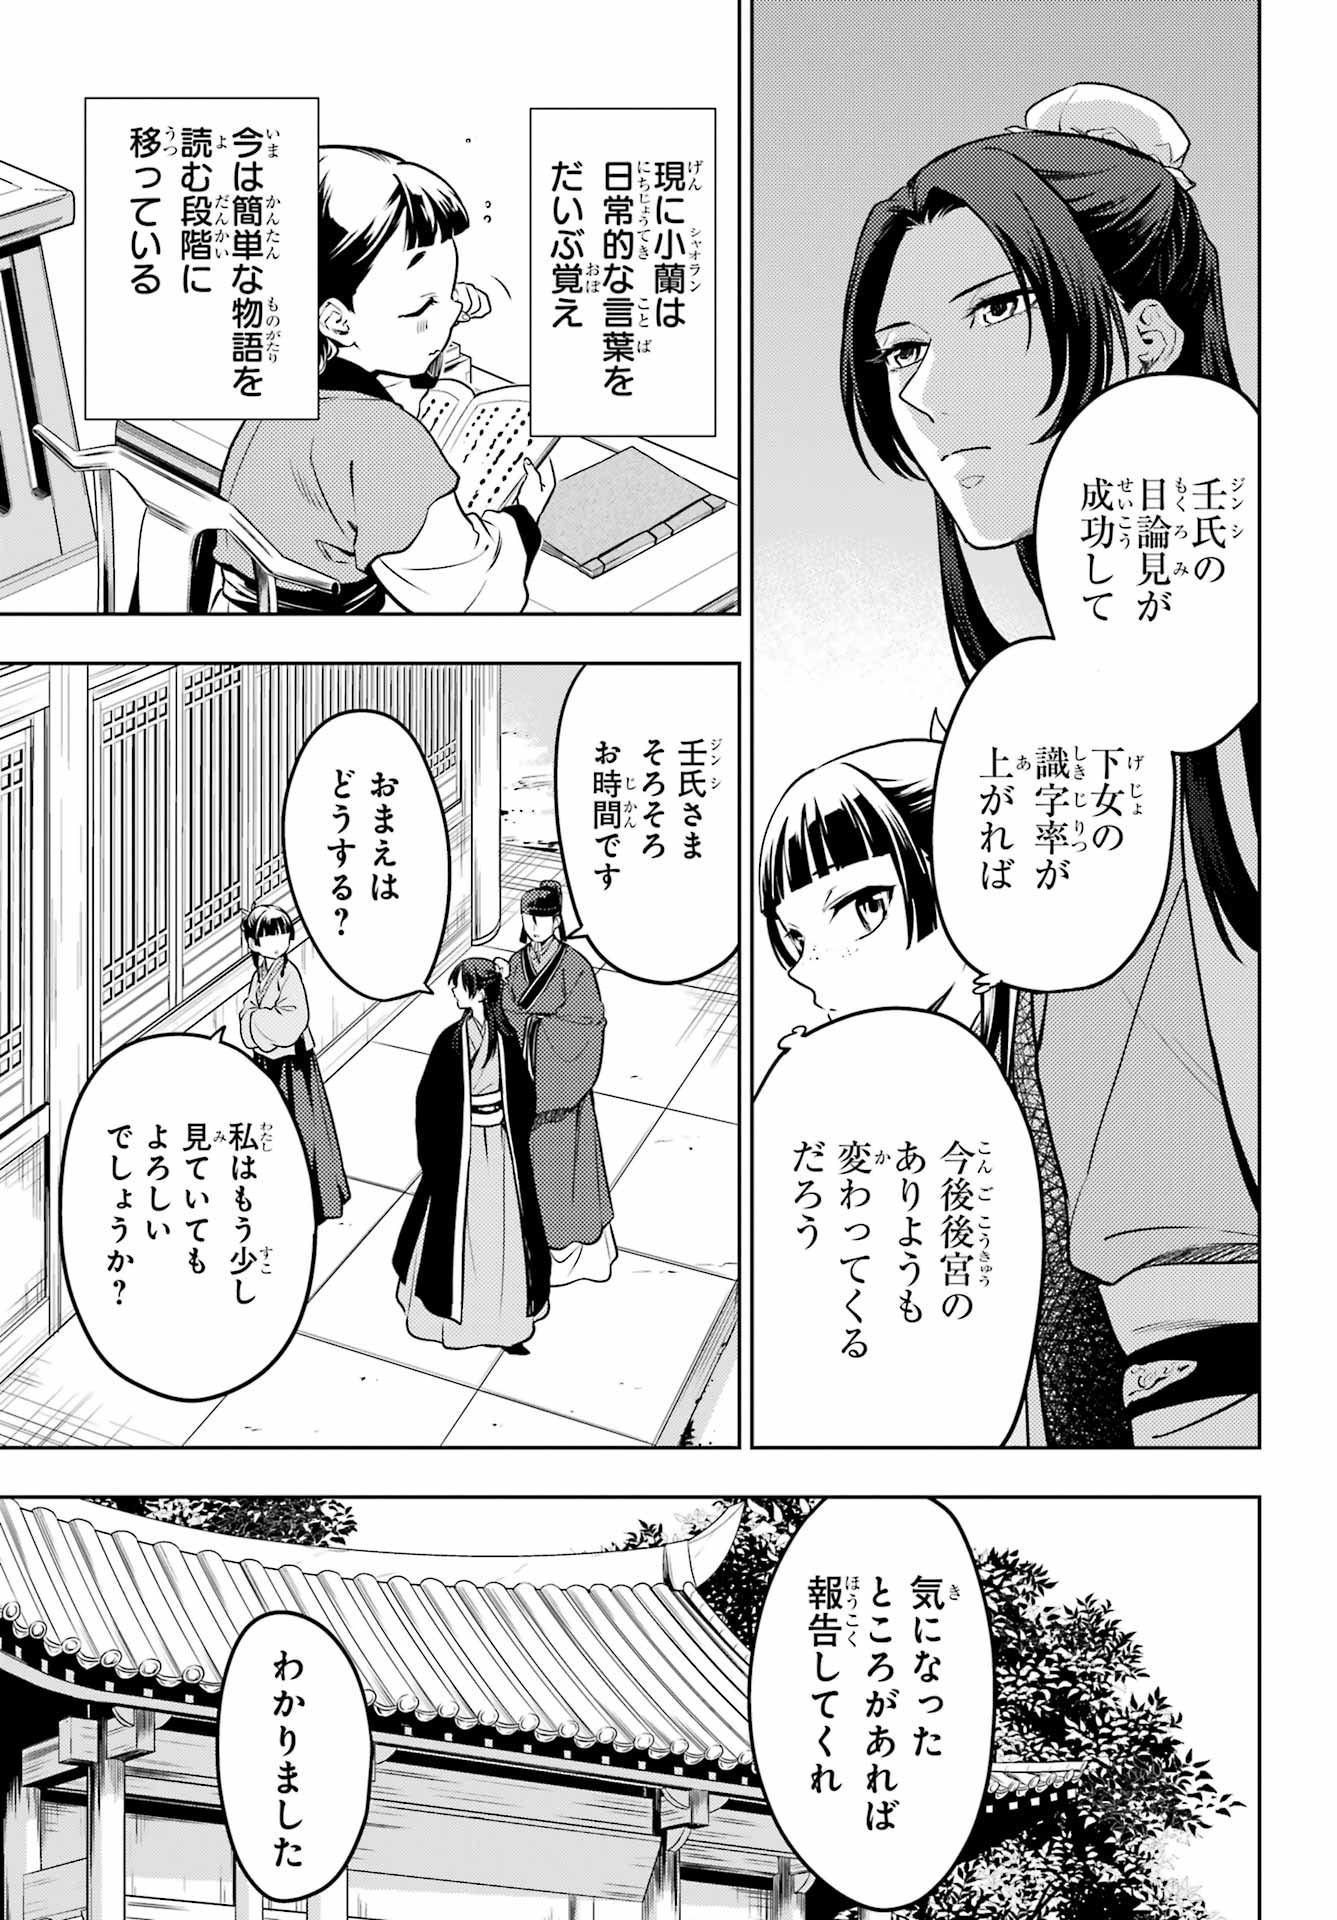 Kusuriya no Hitorigoto - Chapter 53 - Page 3